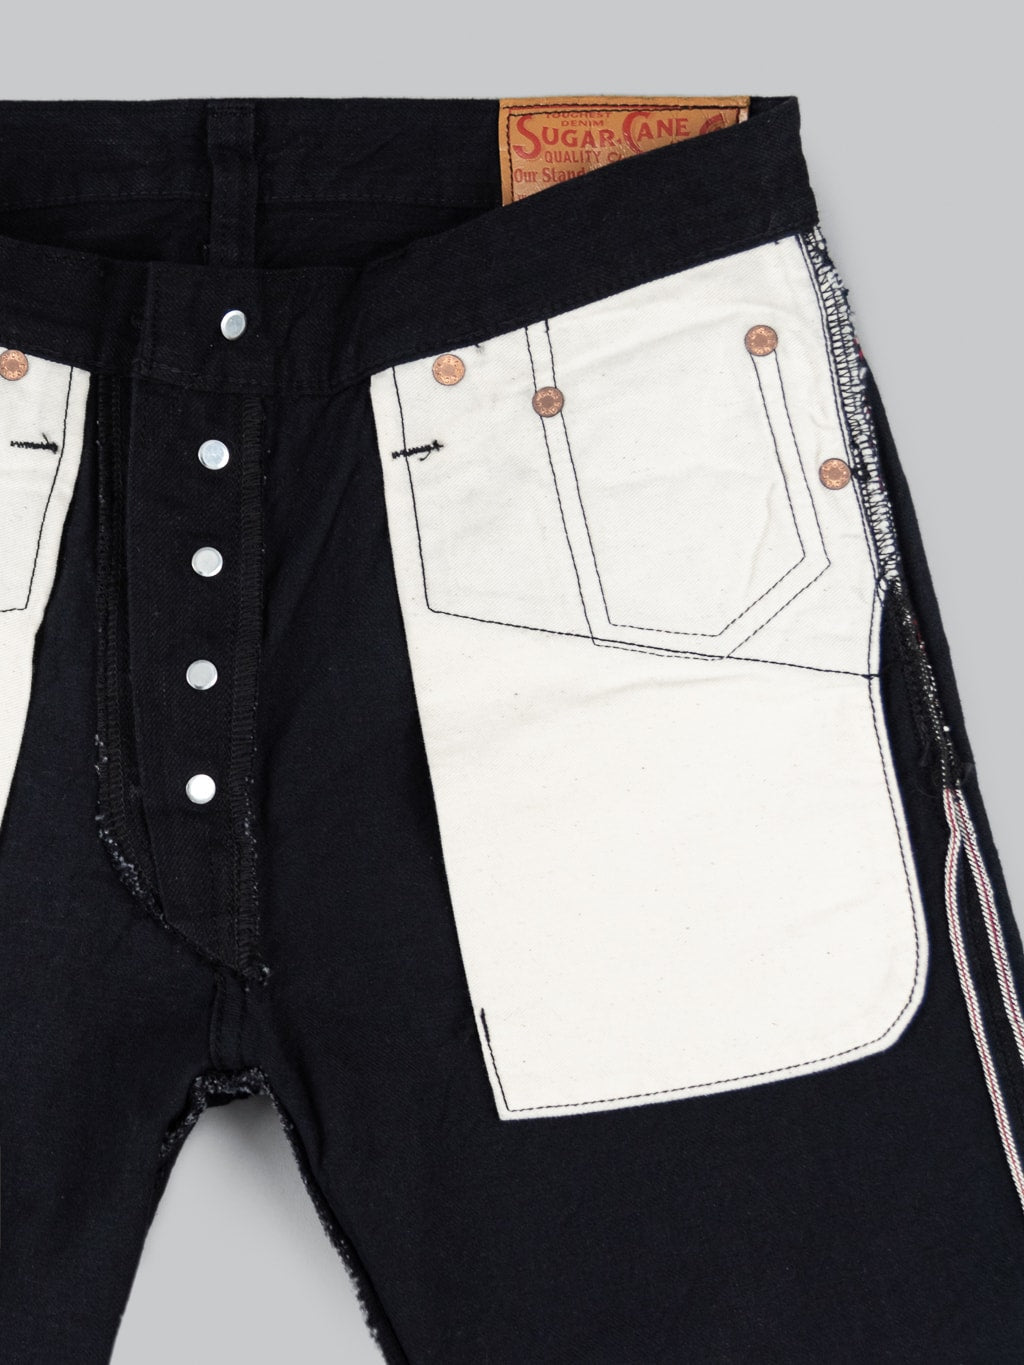 Sugar Cane Type III 13oz Black Denim Slim Jeans interior